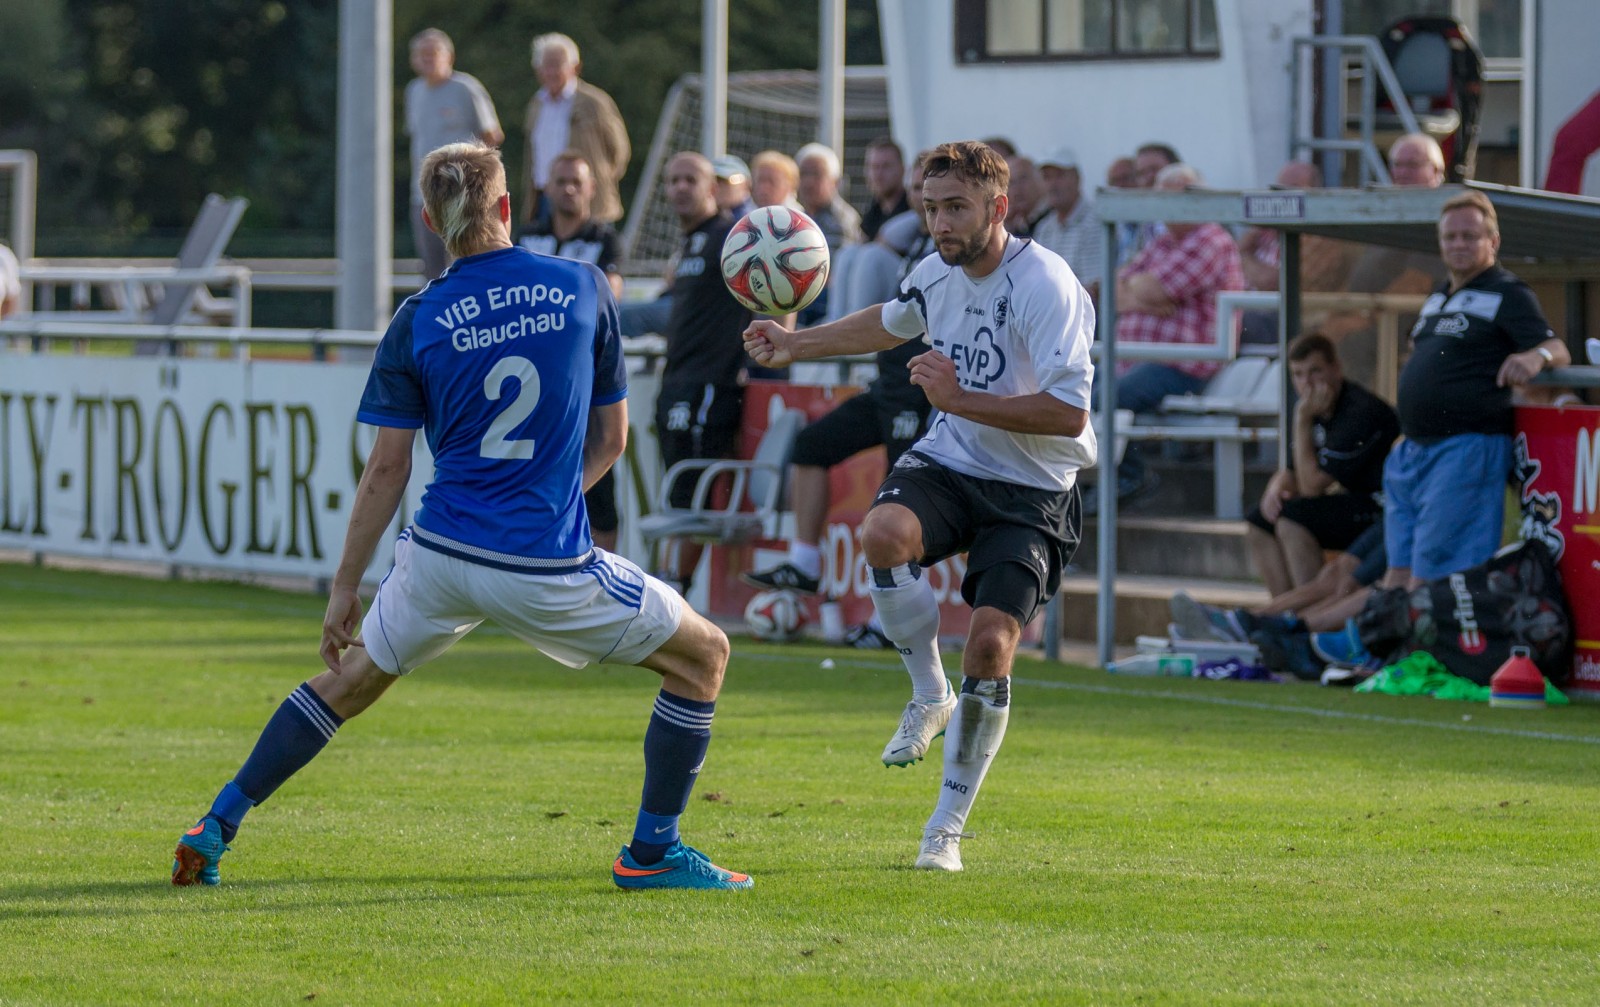 VfL-Kämpfer Richard Lätsch nimmt den Ball vor seinem Gegenspieler an. Foto: Marko Förster